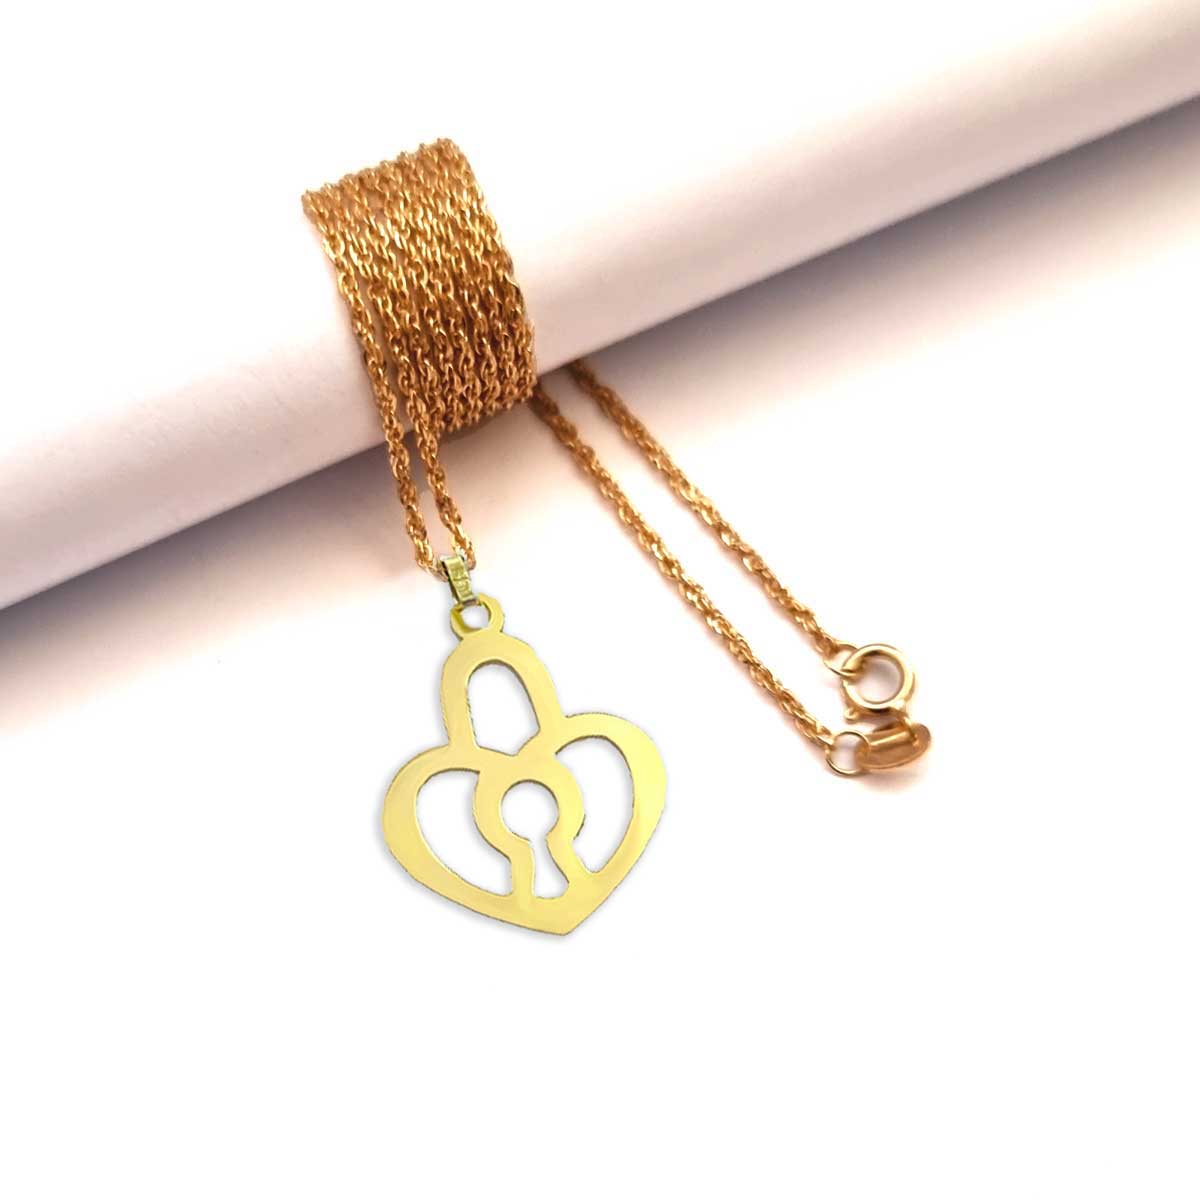 18K Pure Gold Heart Lock Design Pendant Necklace